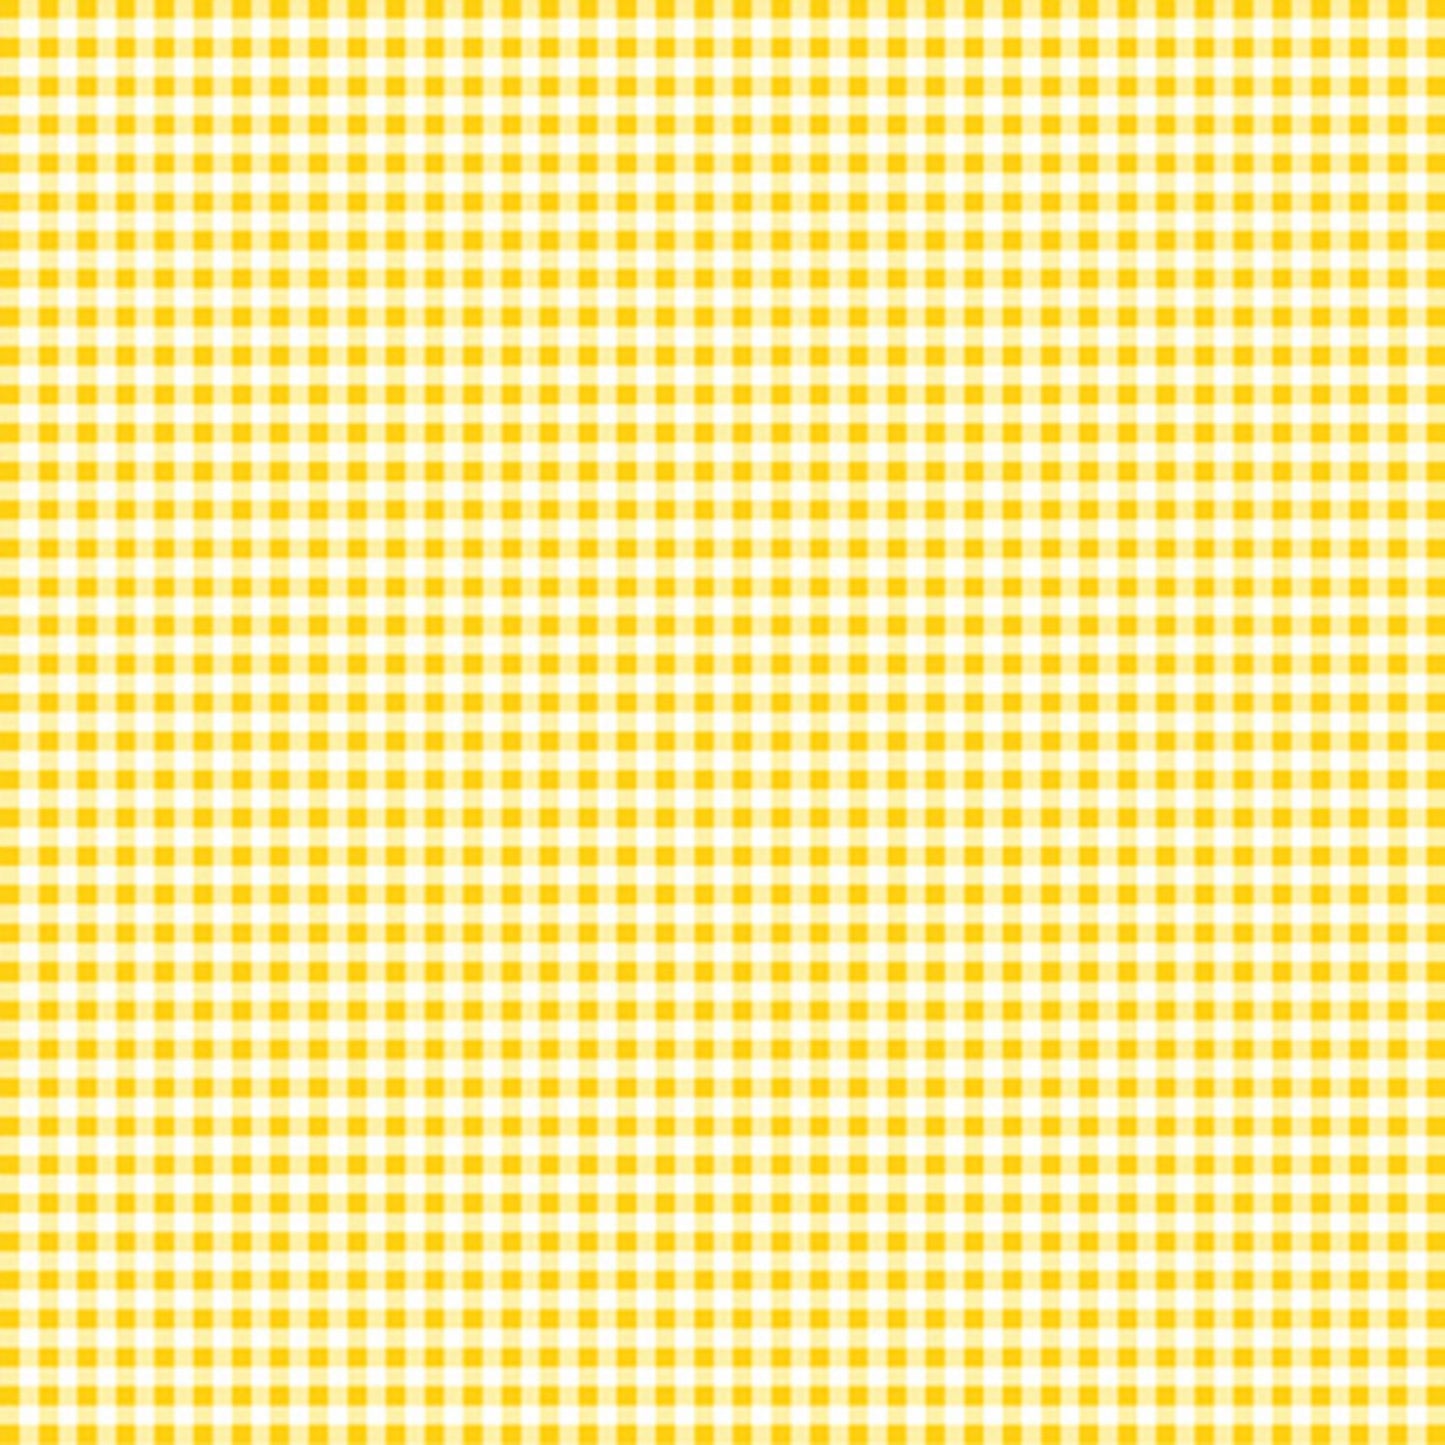 Yellow Gingham Cotton Fabric - Susybee Basics Sweet Bee Collection - SB20268-310